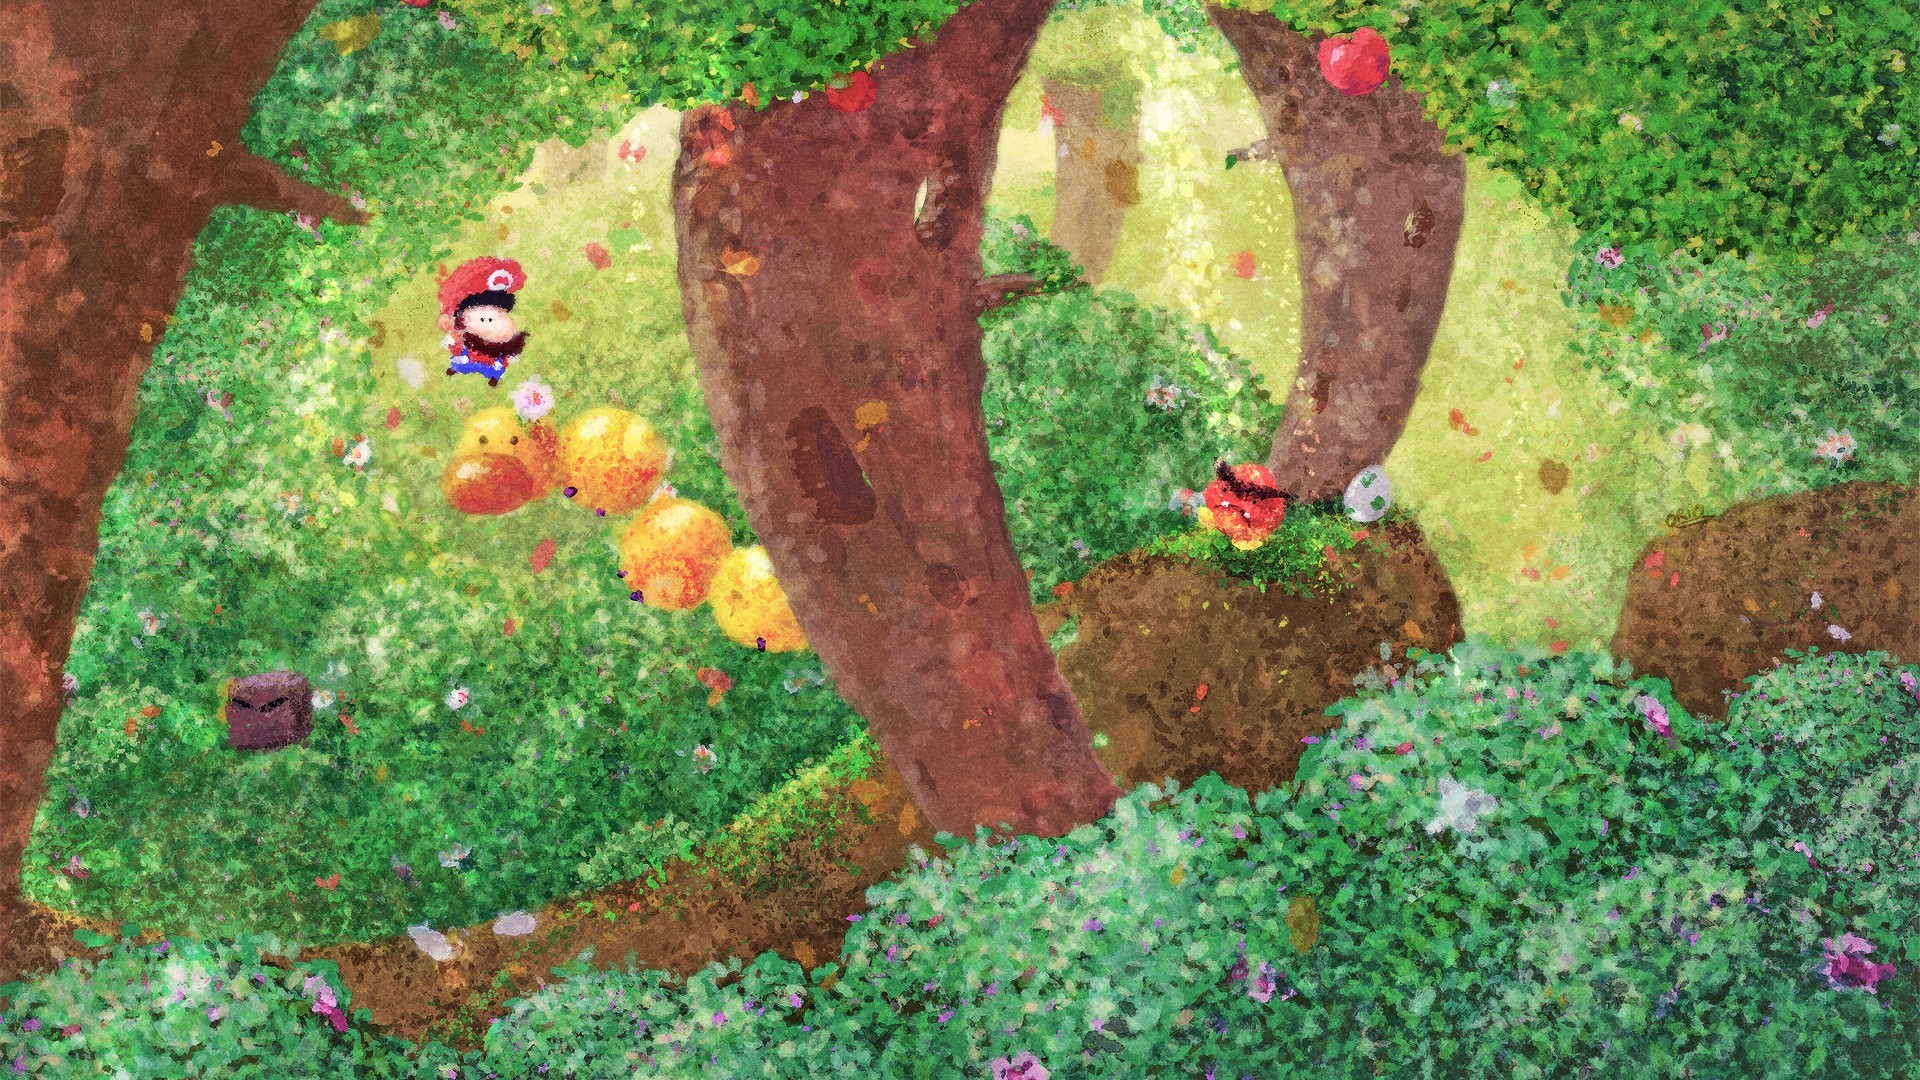 Digital Art Super Mario Goomba Forest Video Games 1920x1080